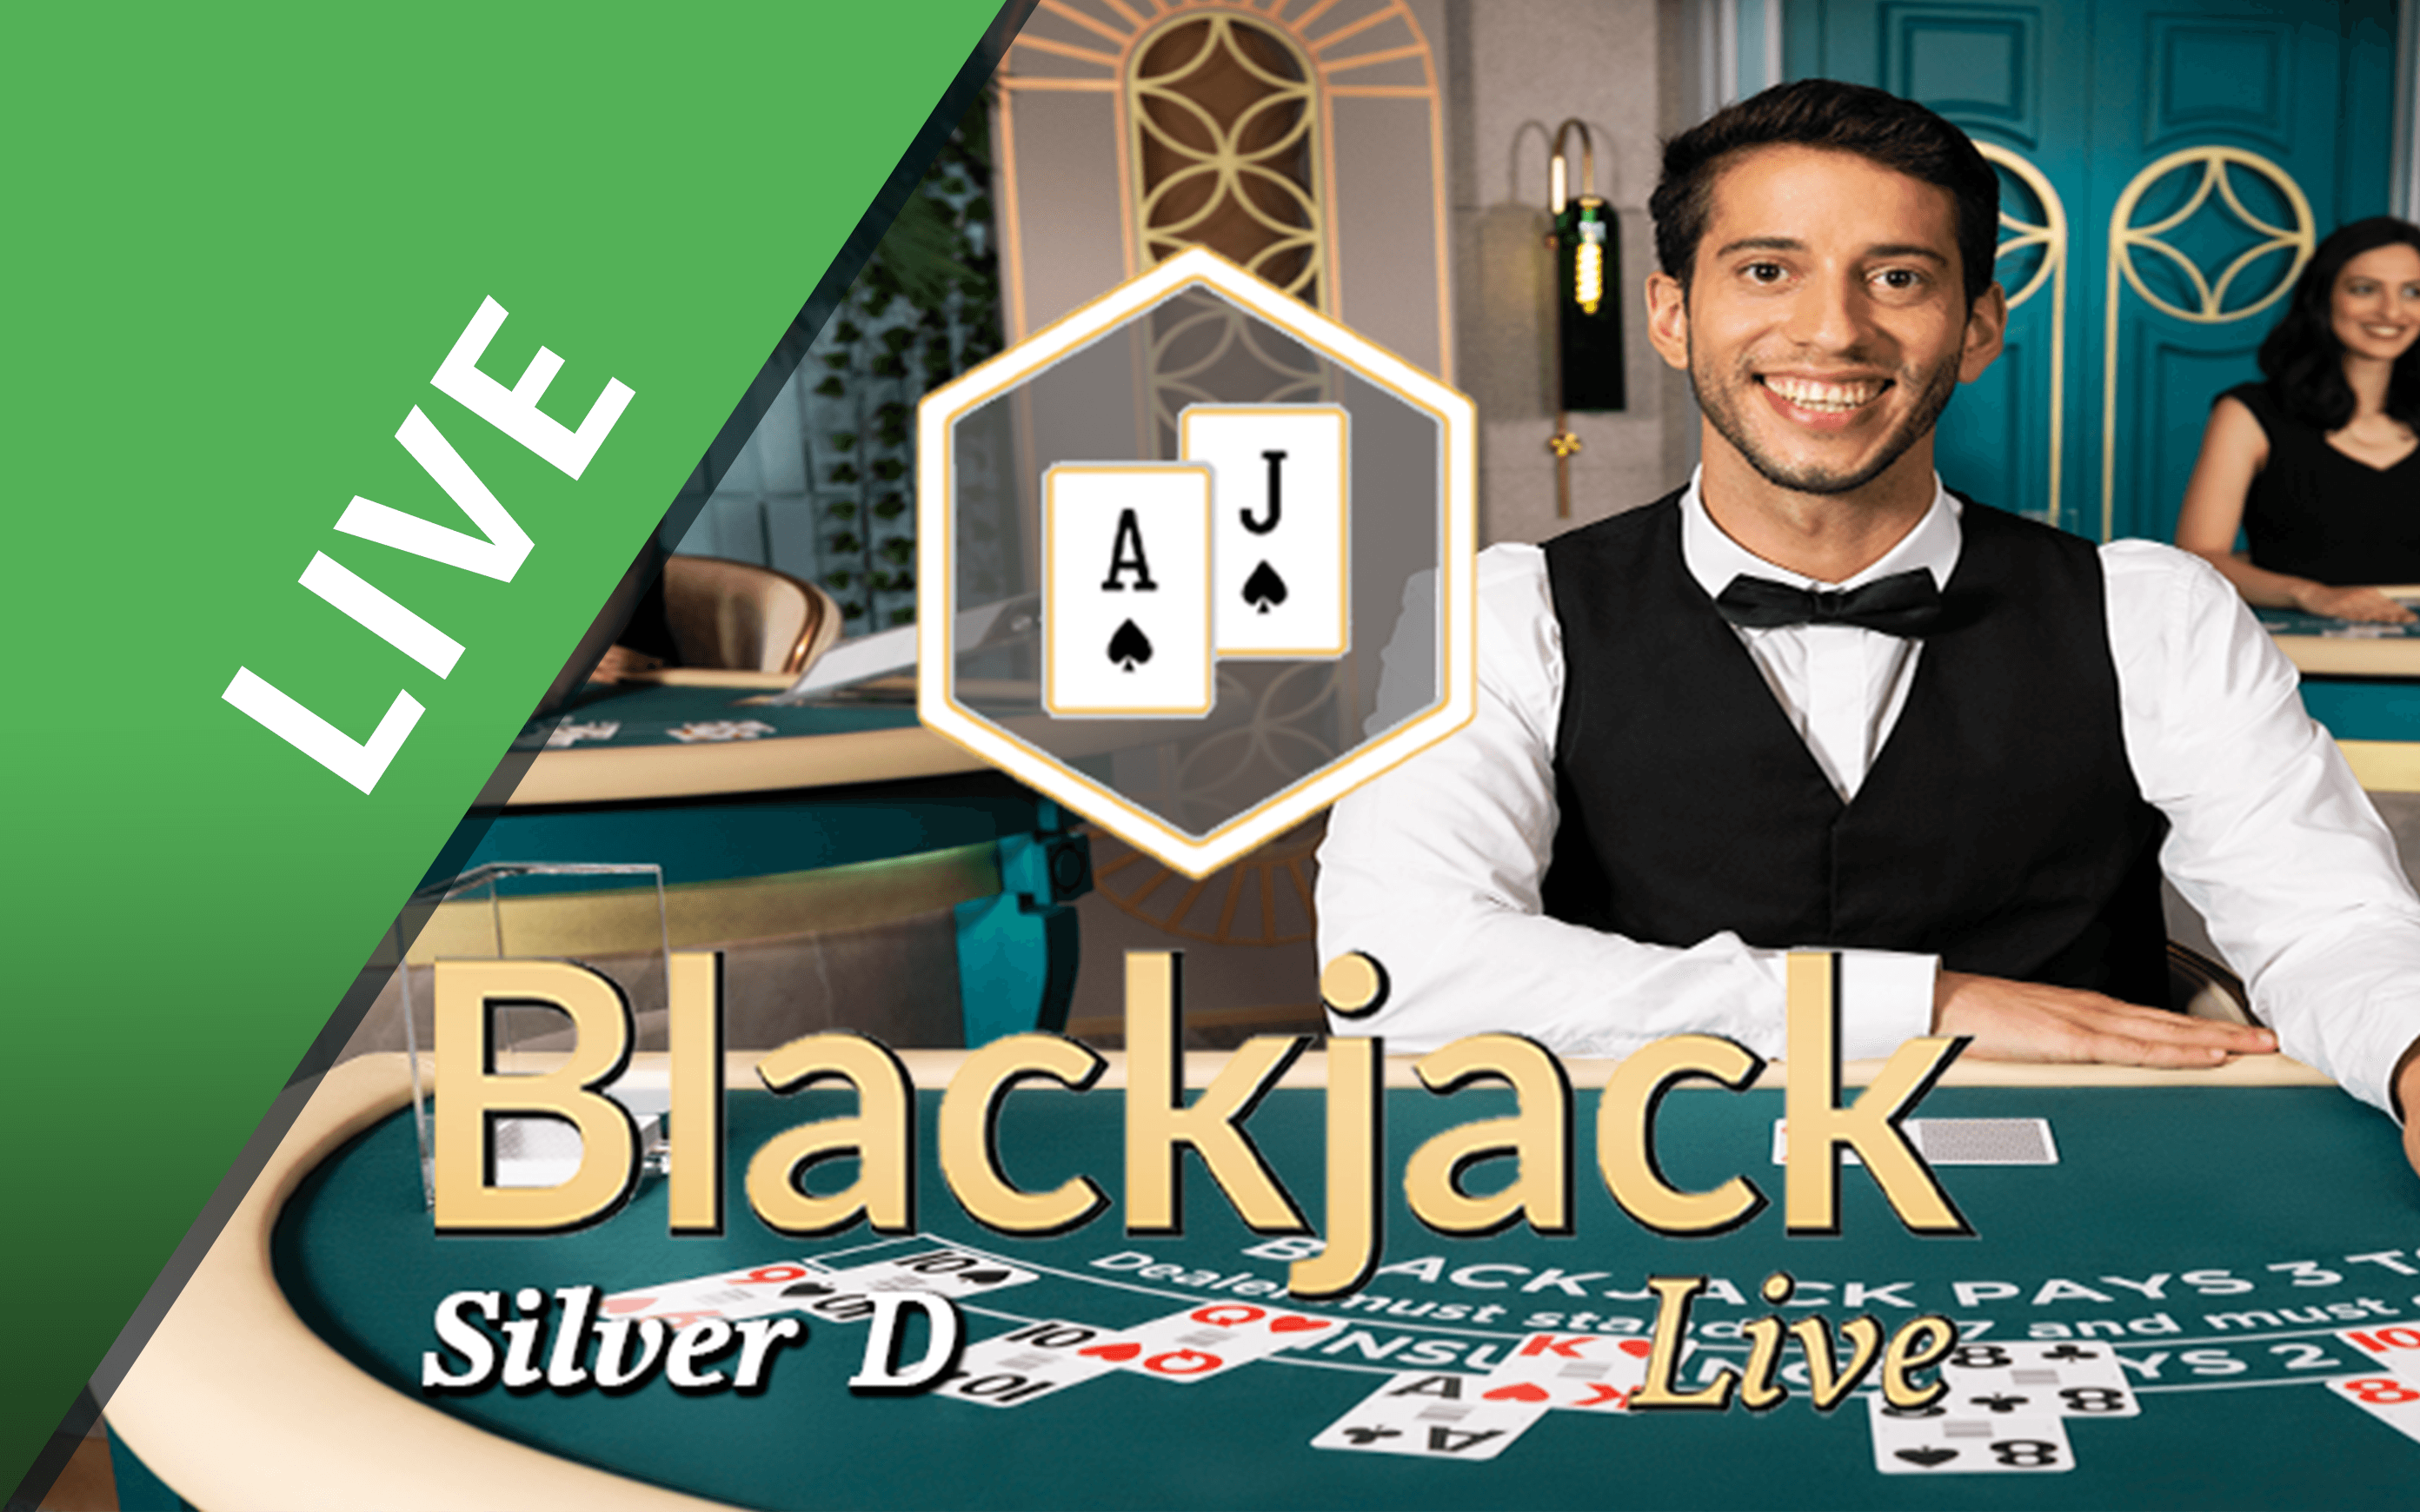 Play Blackjack Silver D on Starcasino.be online casino